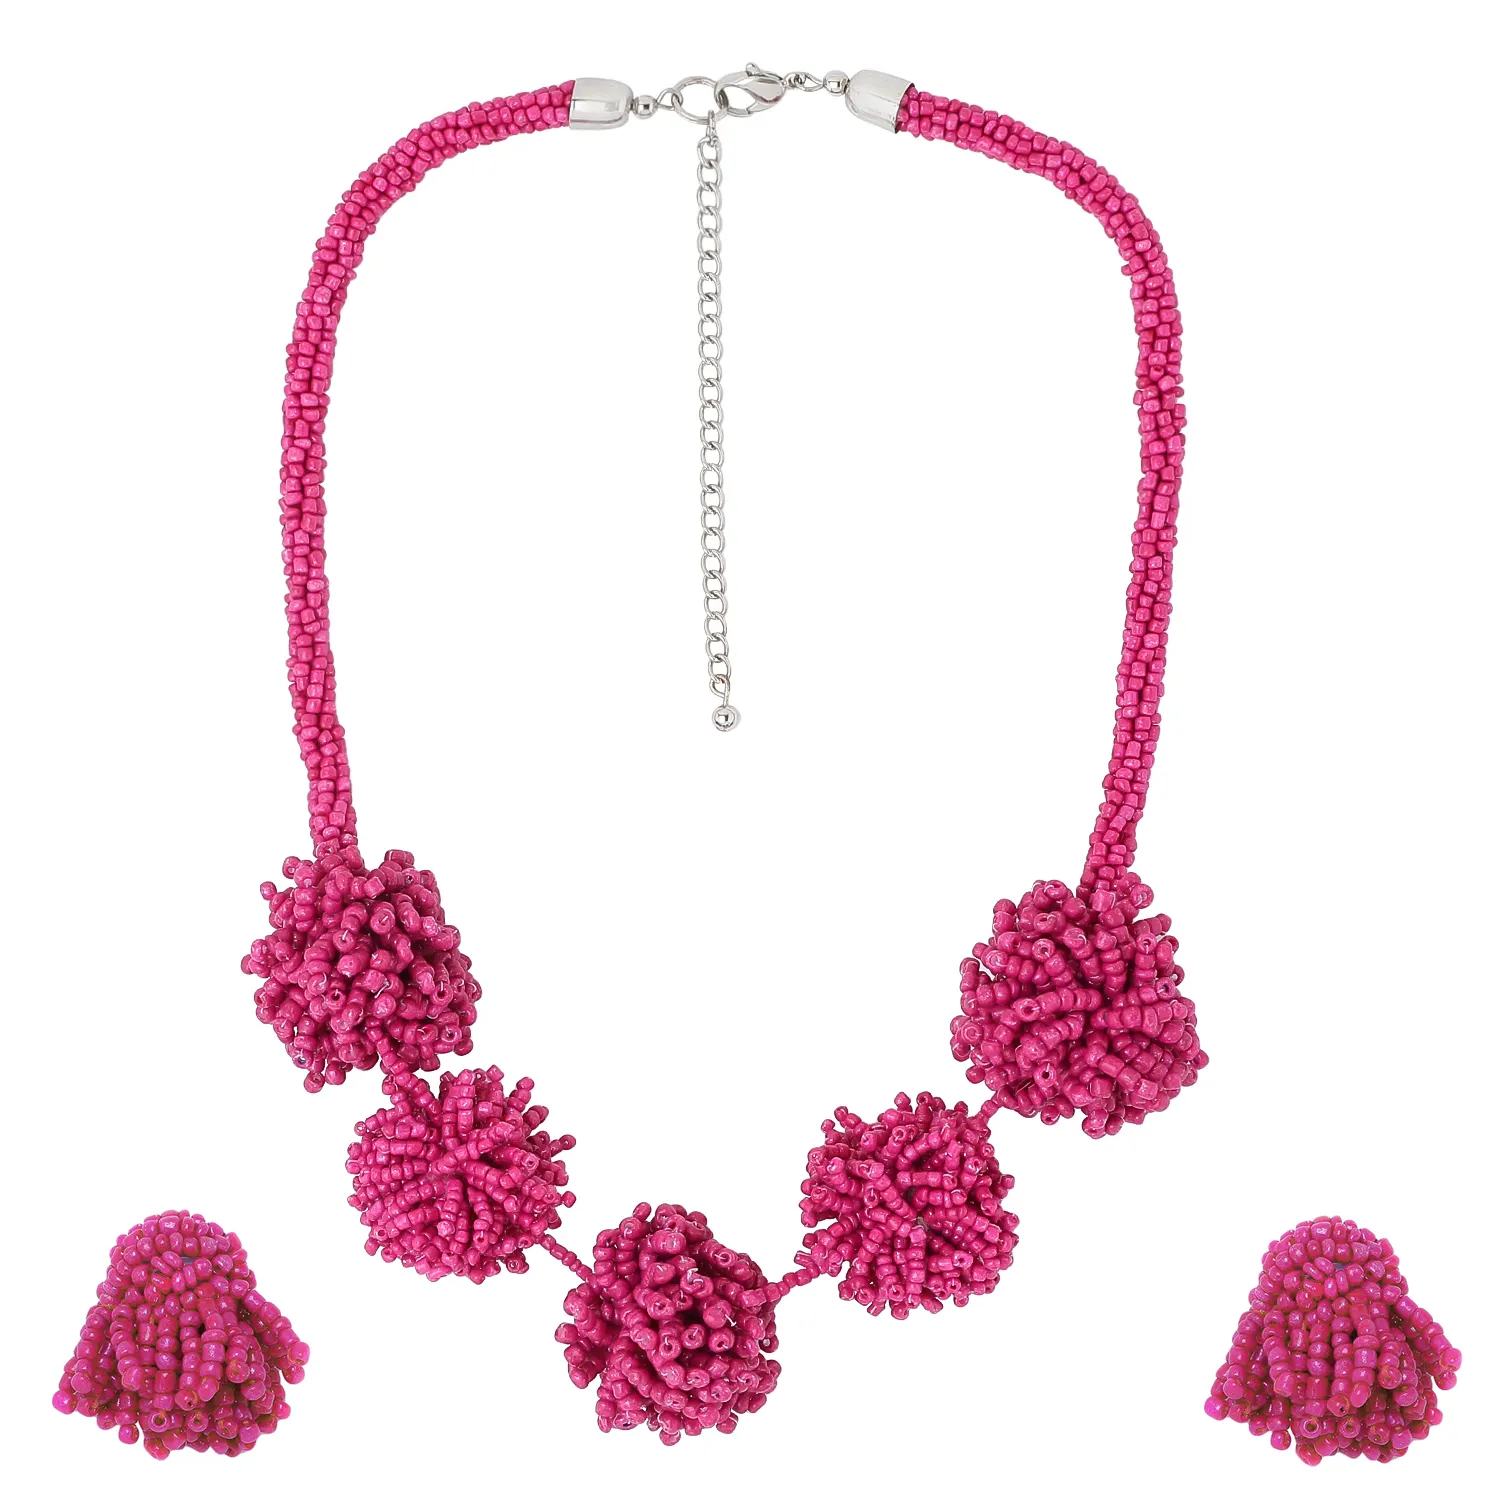 Royal look Flower Beaded Necklace mit Earrings // Bead Necklace für mädchen und frauen// Handmade Jewellery